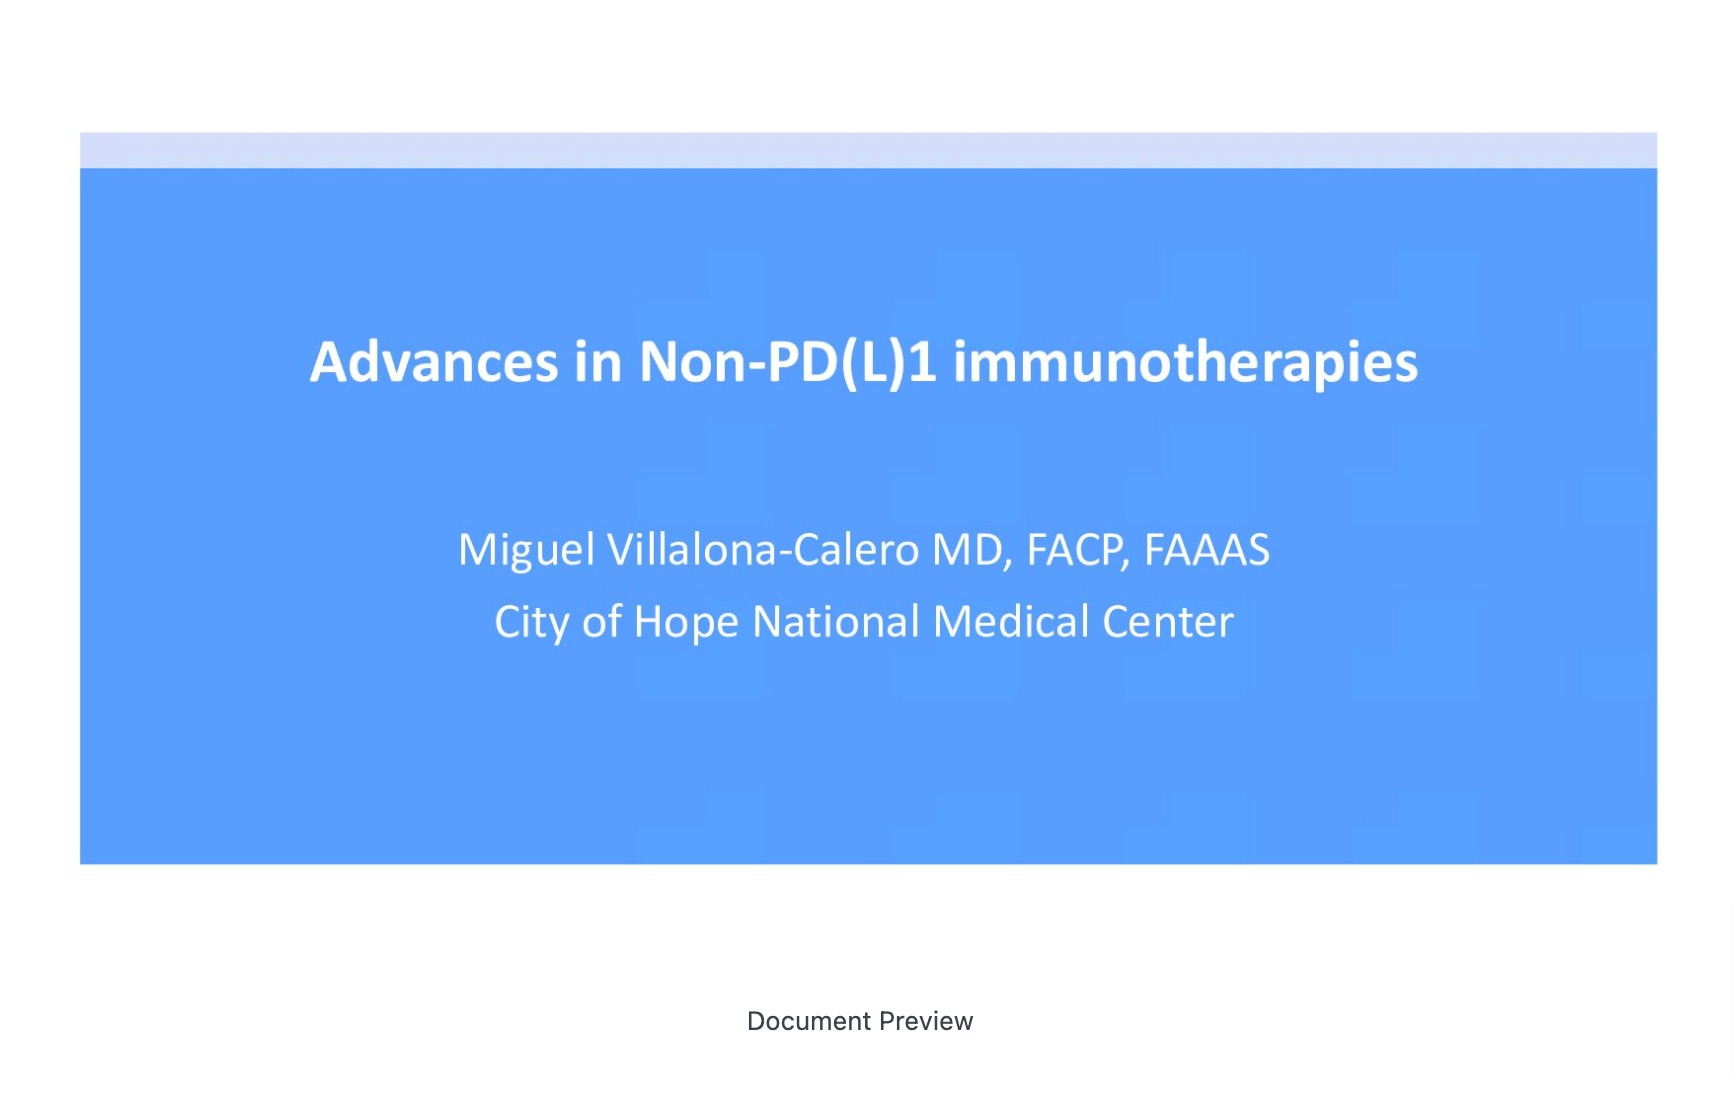 Advances in Non-PD(L)1 Immunotherapies